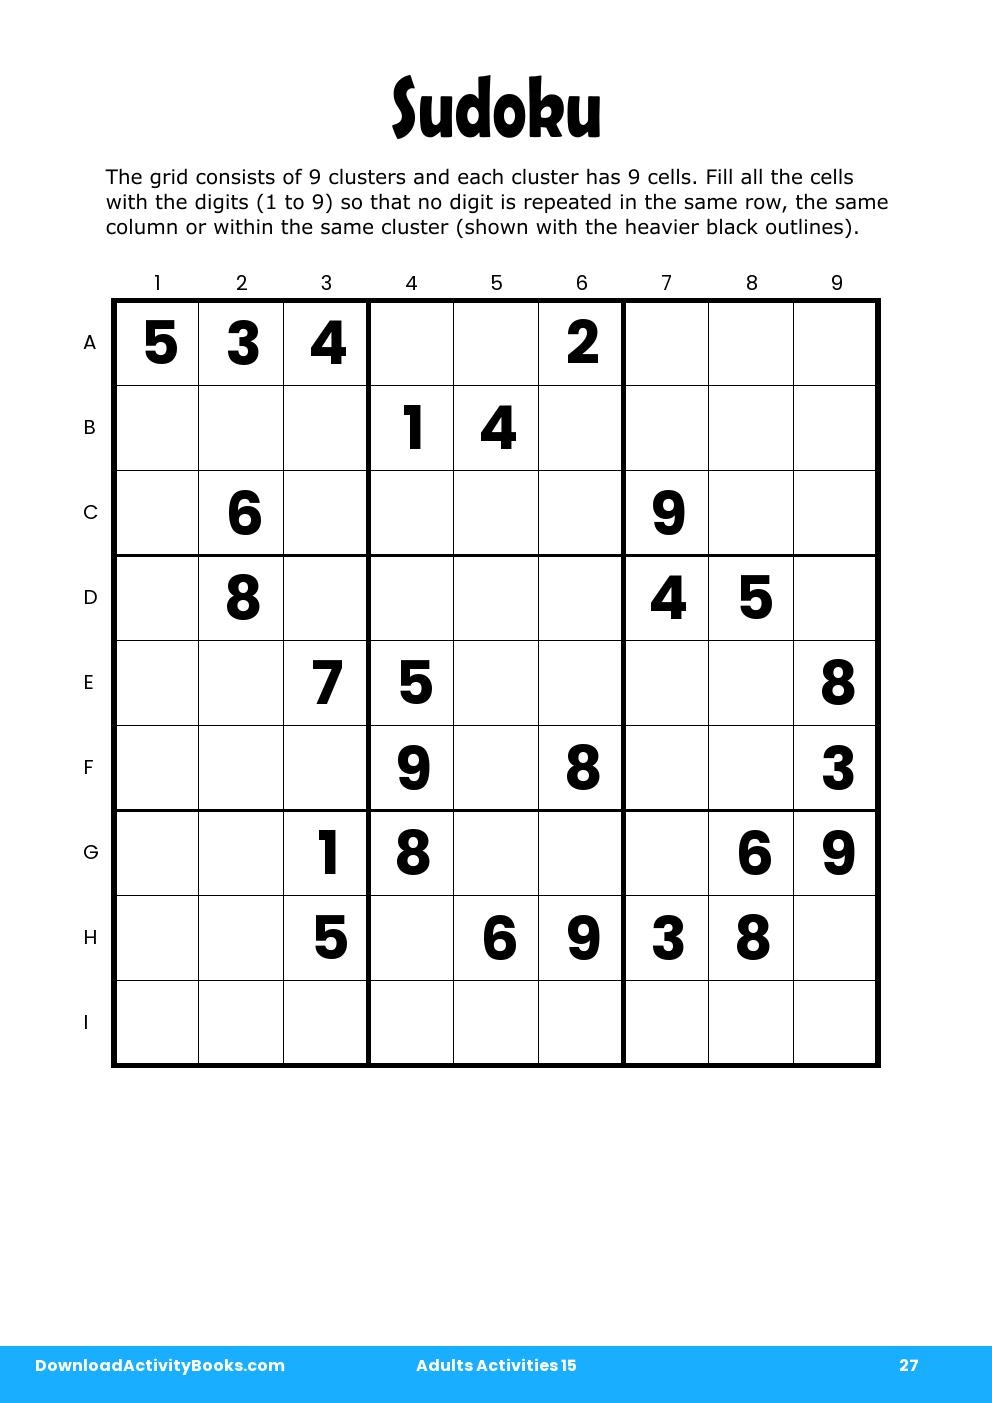 Sudoku in Adults Activities 15